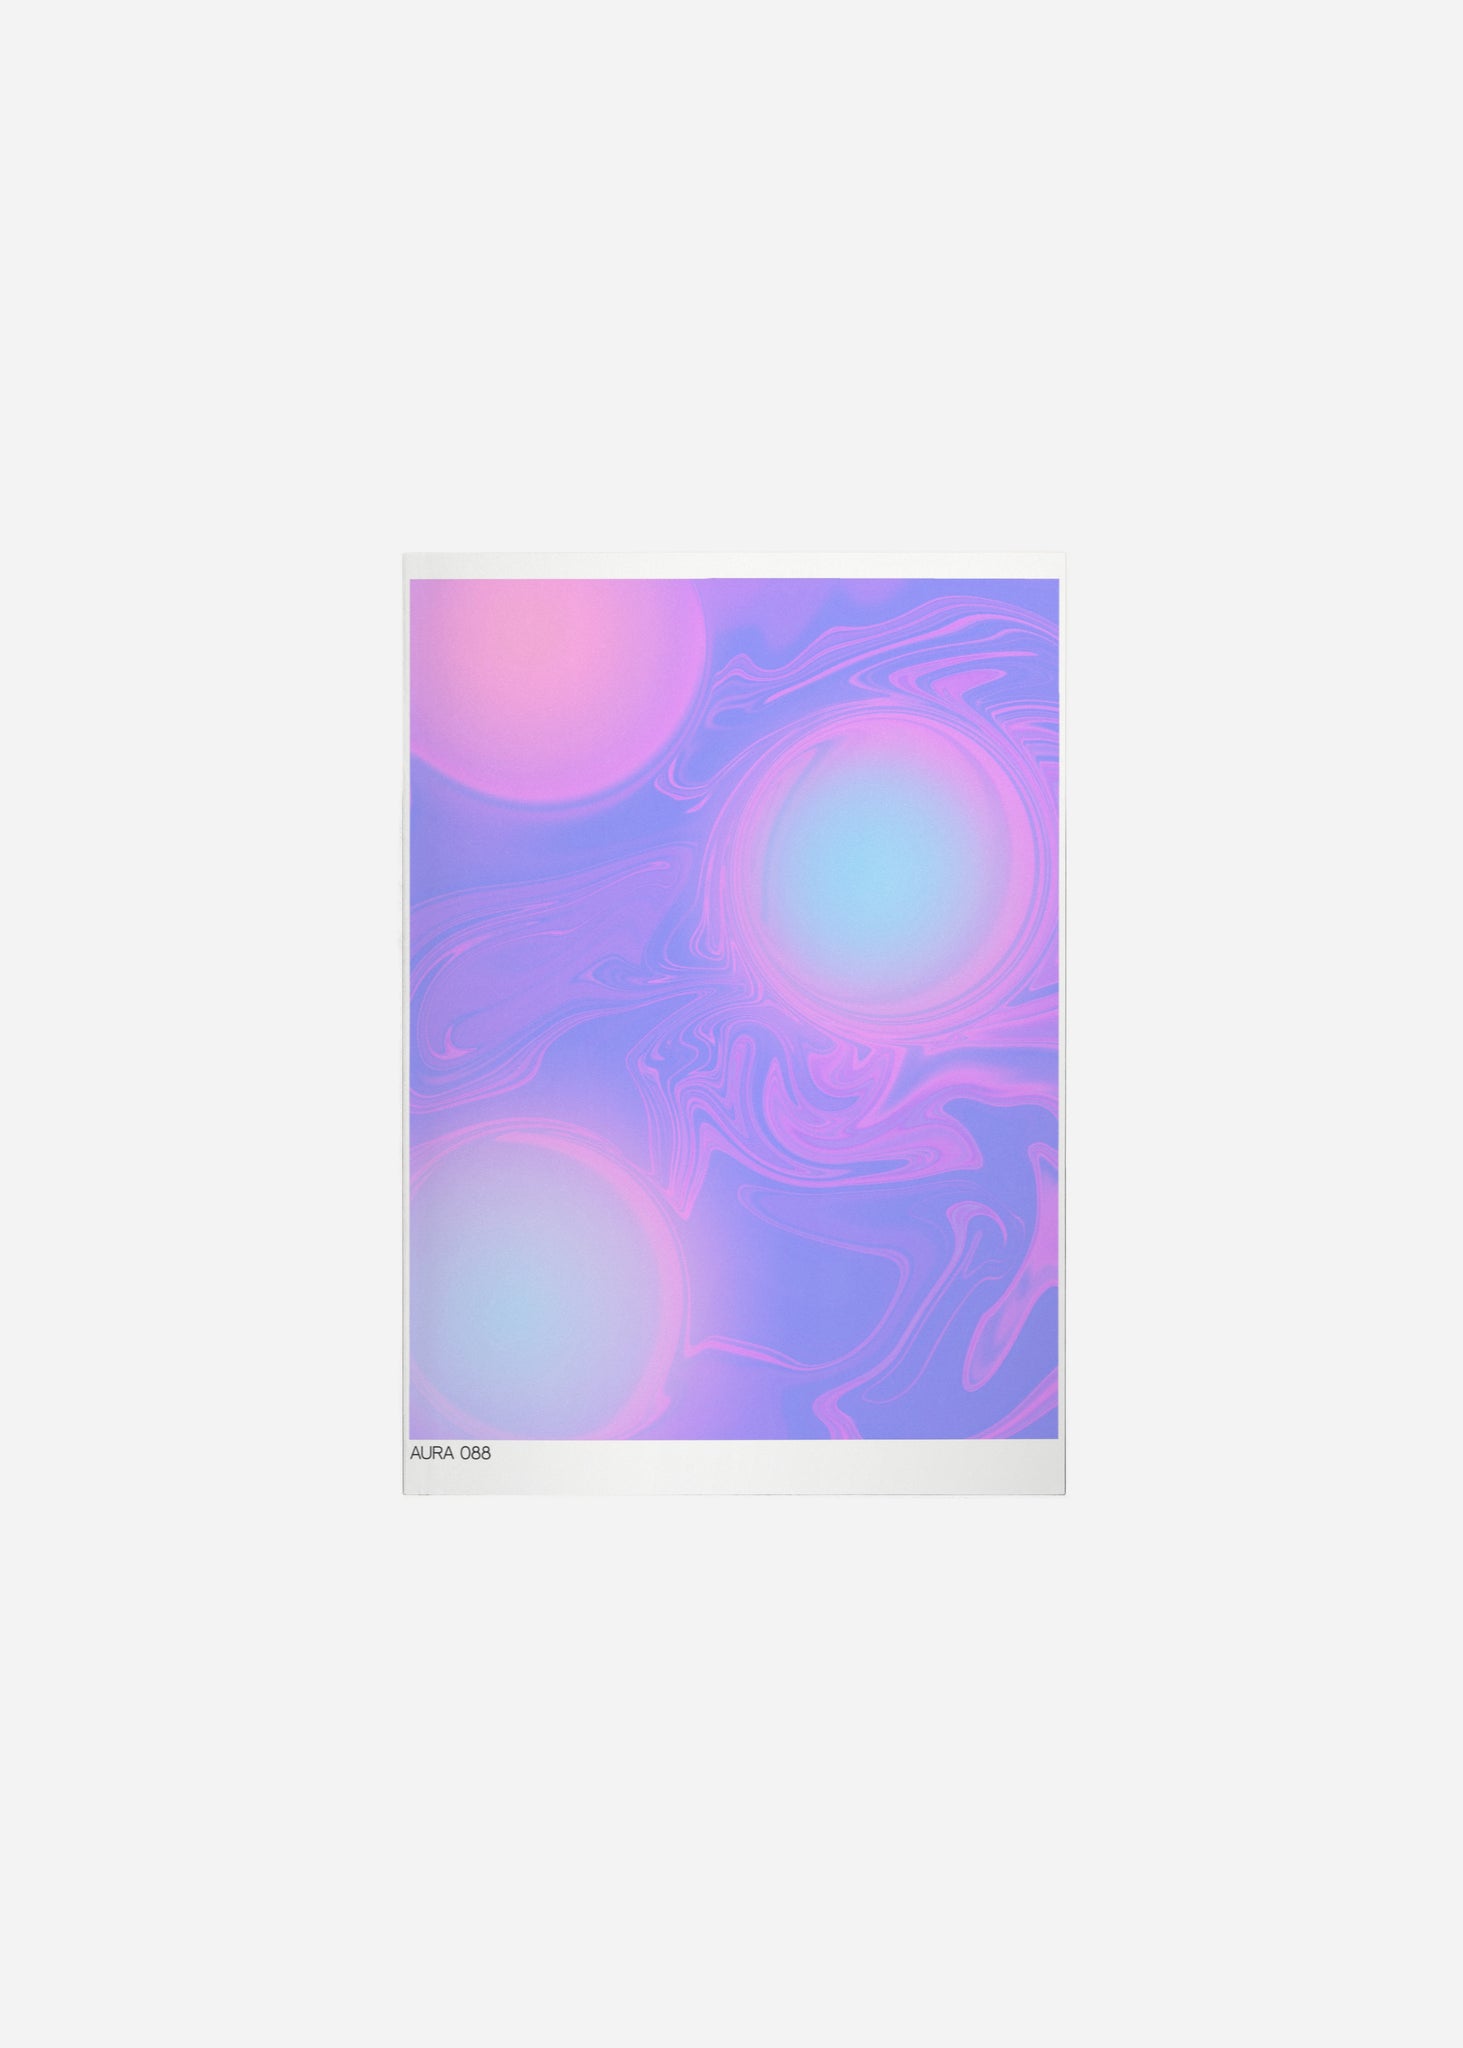 aura 088 Fine Art Print